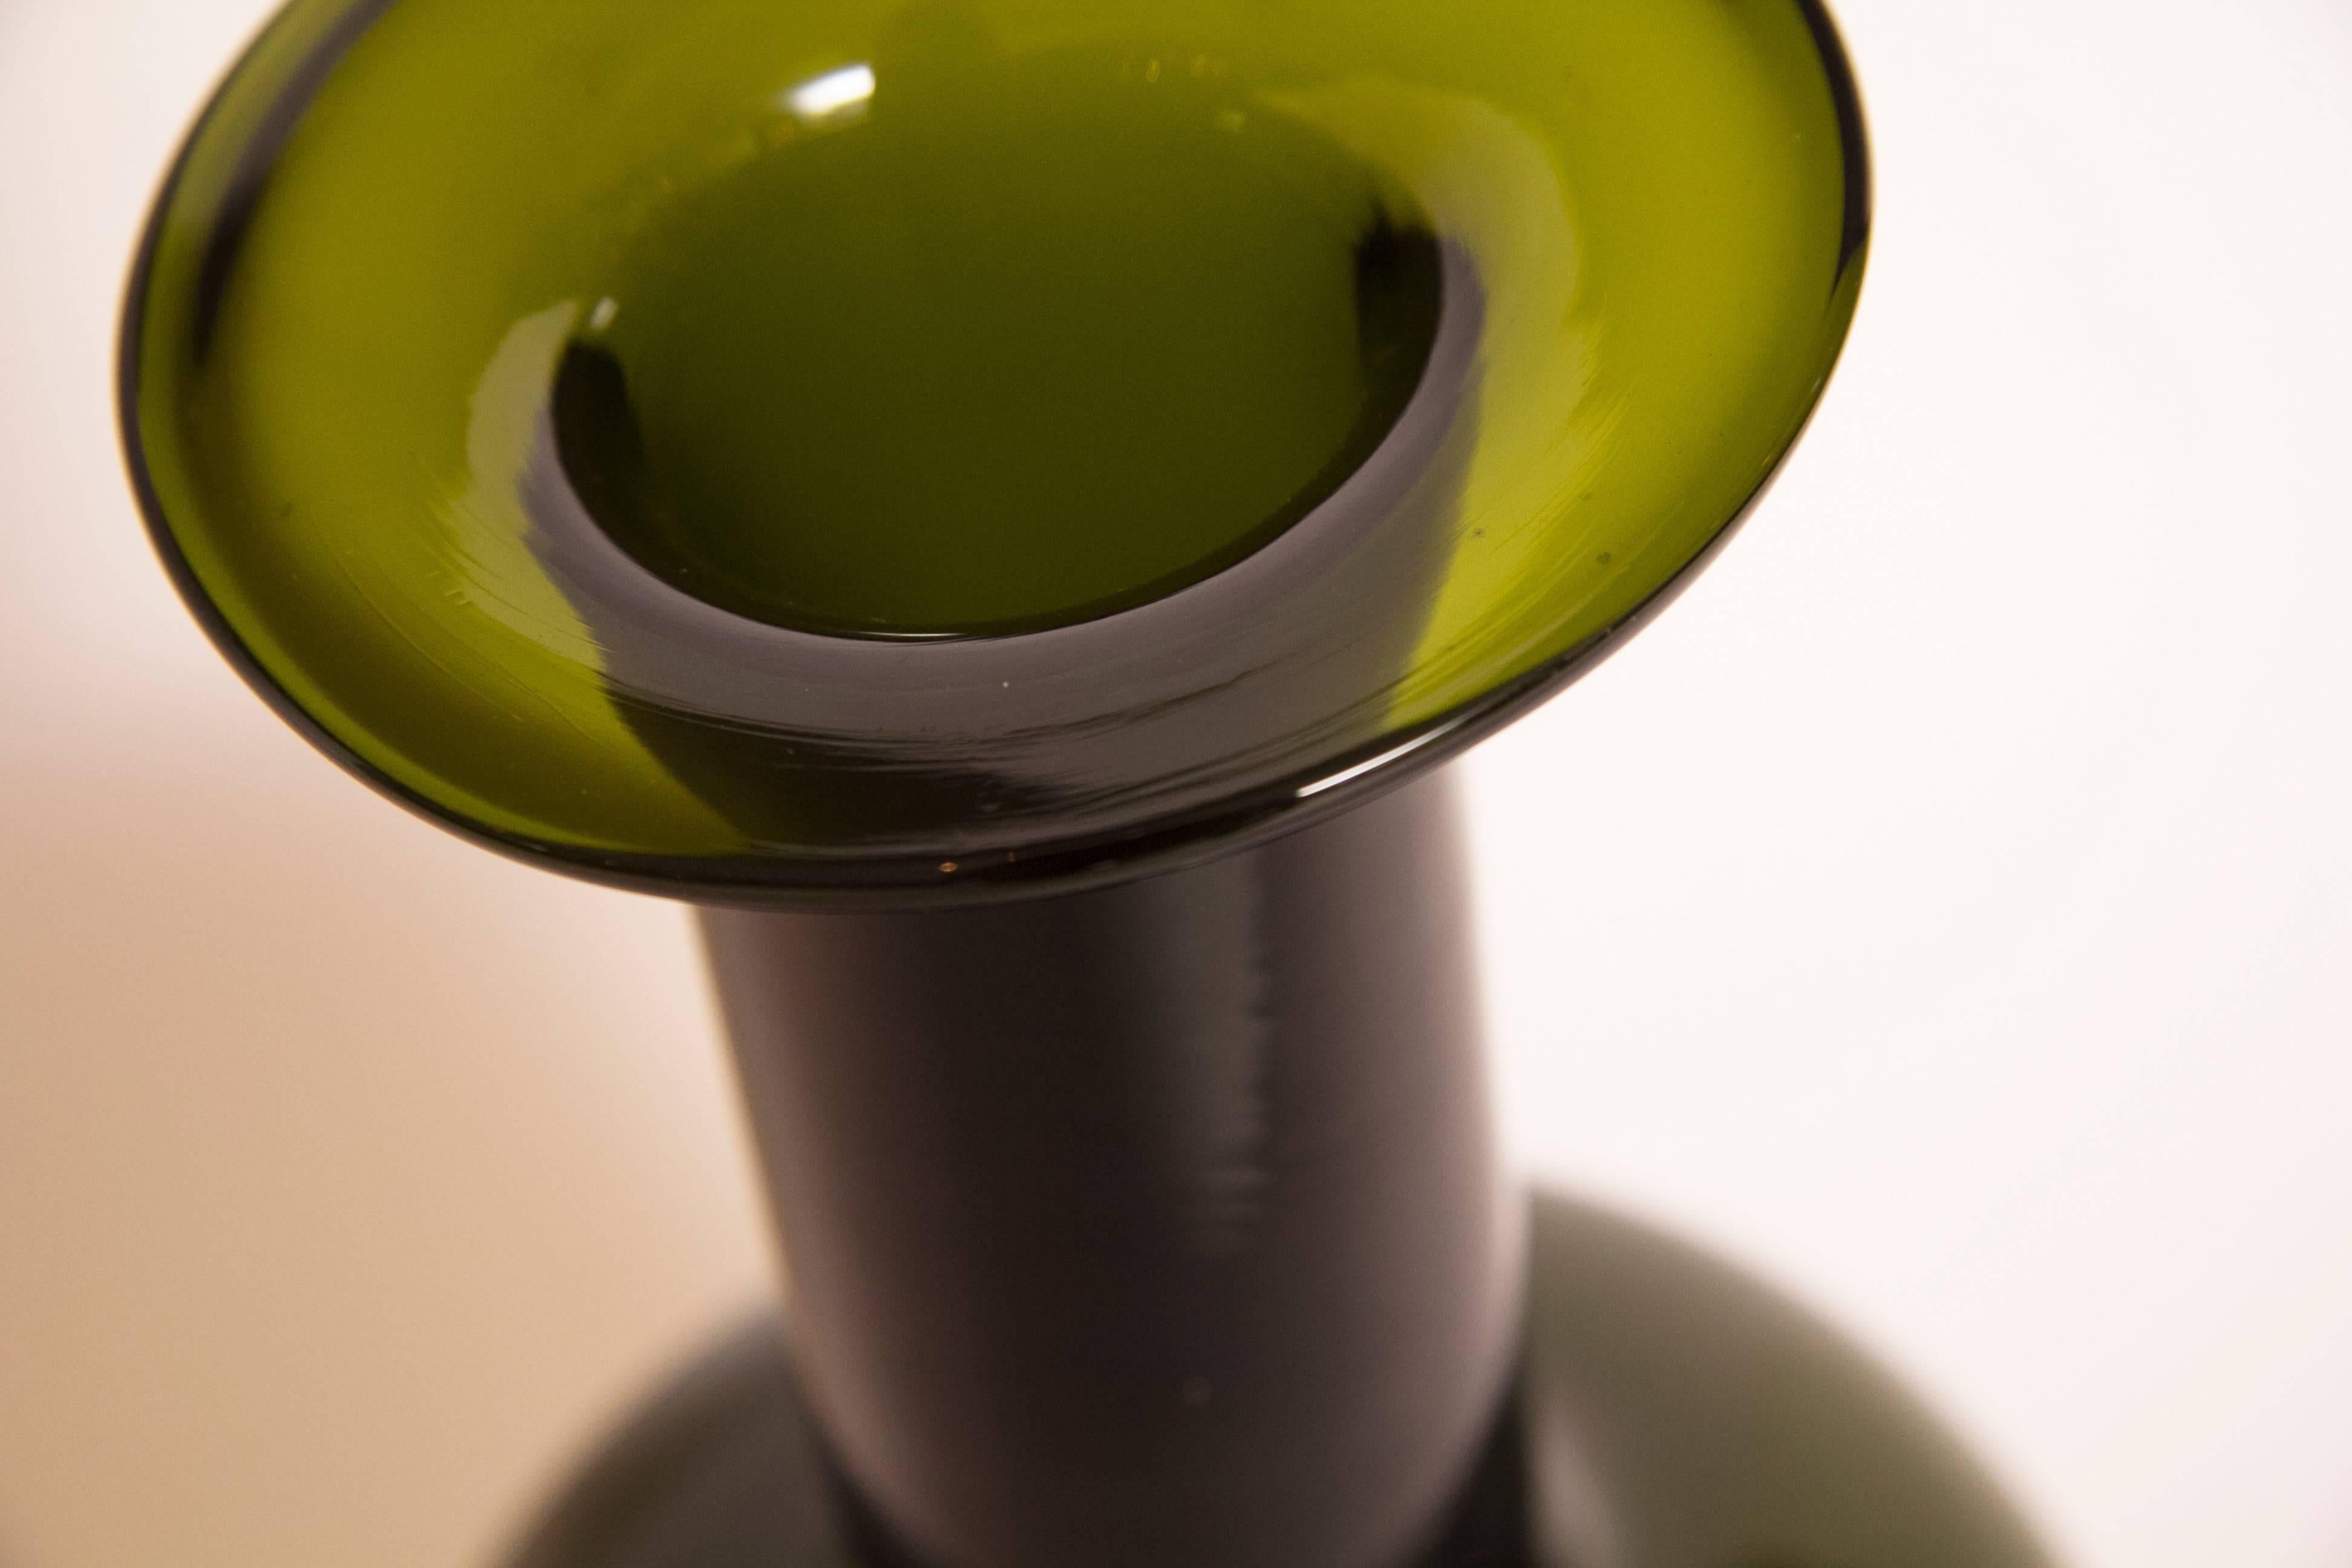 Midcentury Glass vase.
Midcentury Large dark green gulvase designed by Otto Brauer for Holmegaard.
Measure: H 31 cm x W 13 cm x D 13 cm
Danish, circa 1960.